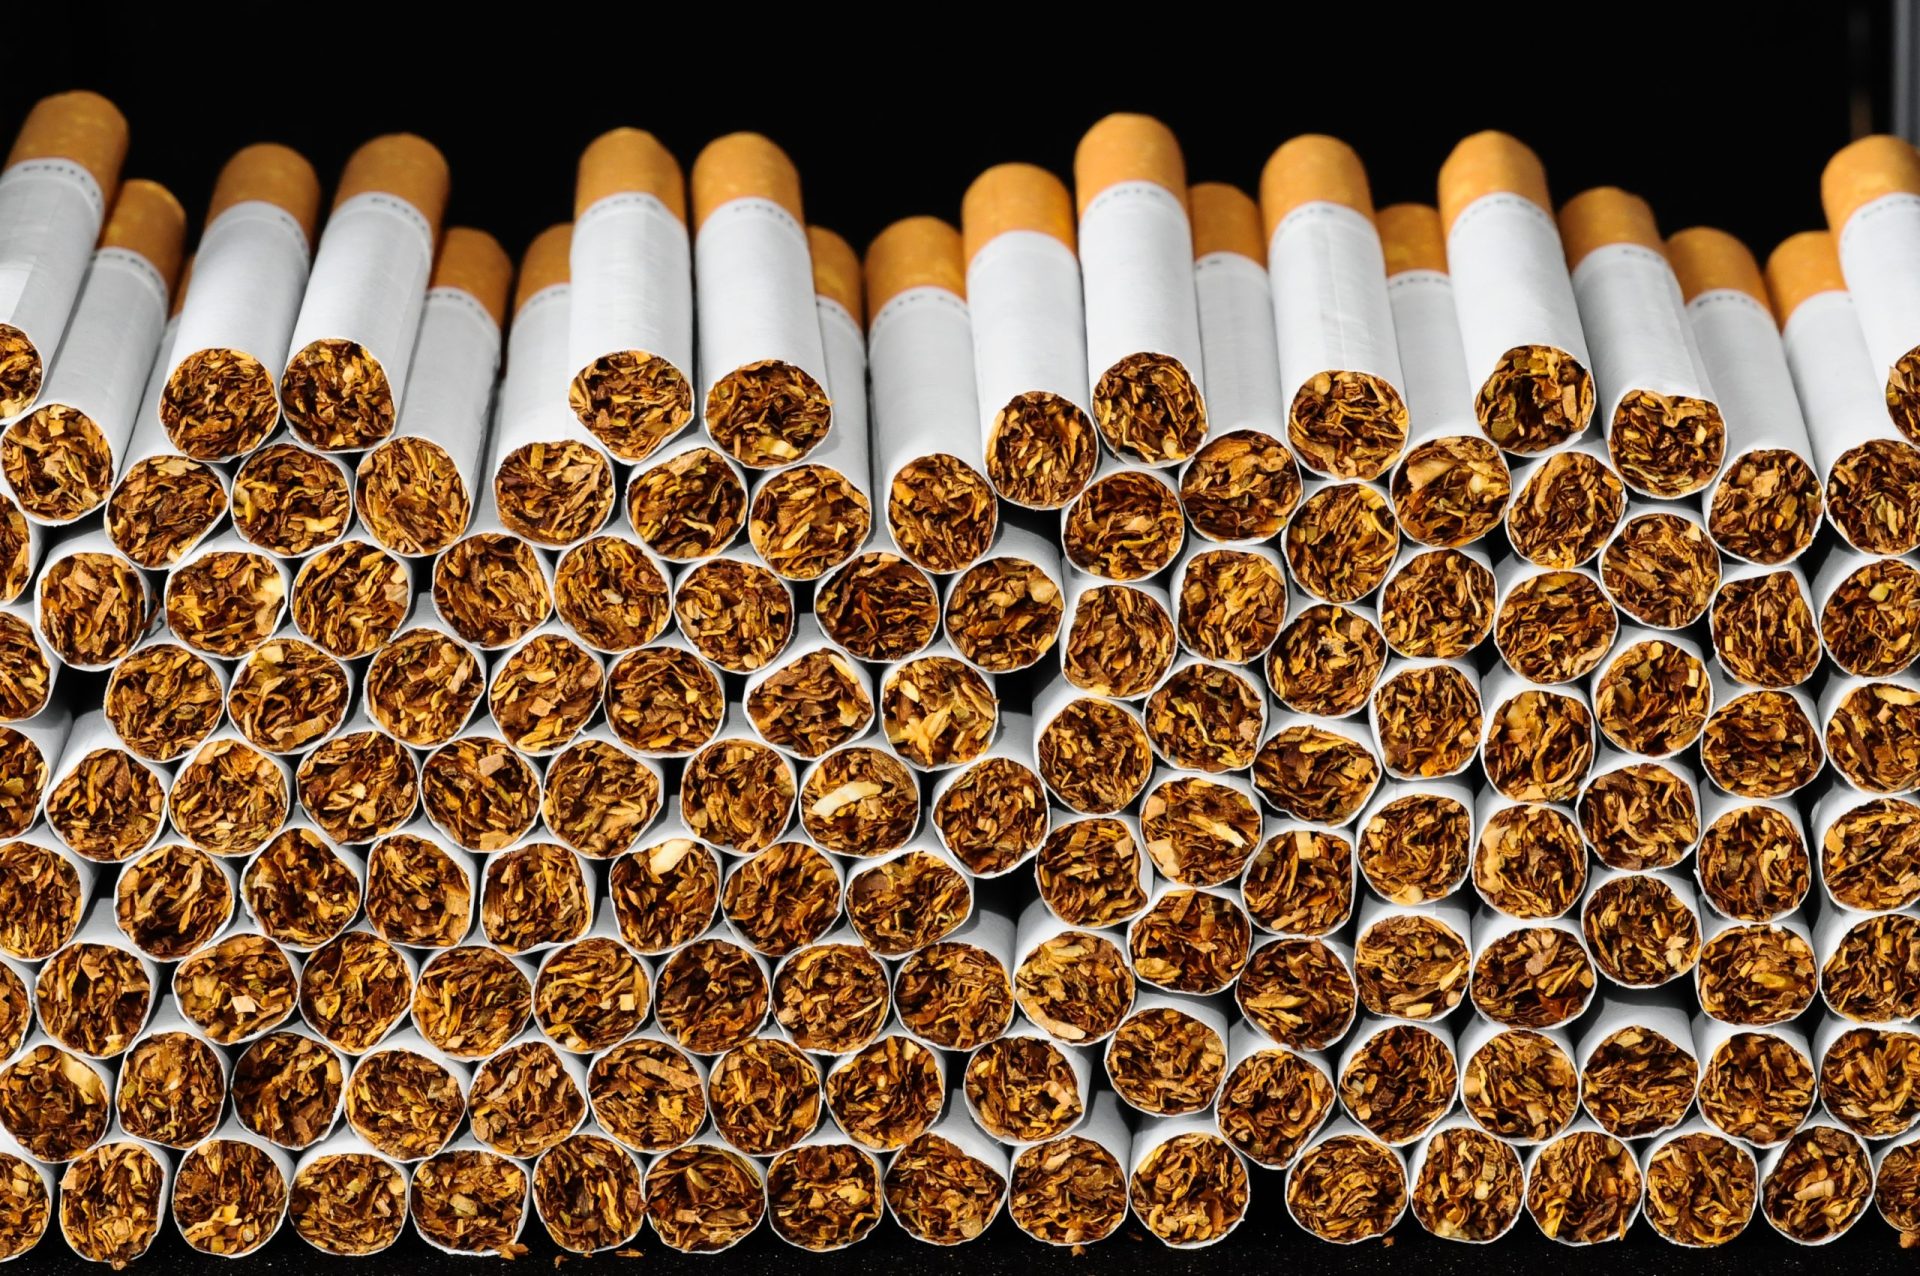 PJ apreendeu 9 milhões de cigarros de contrabando